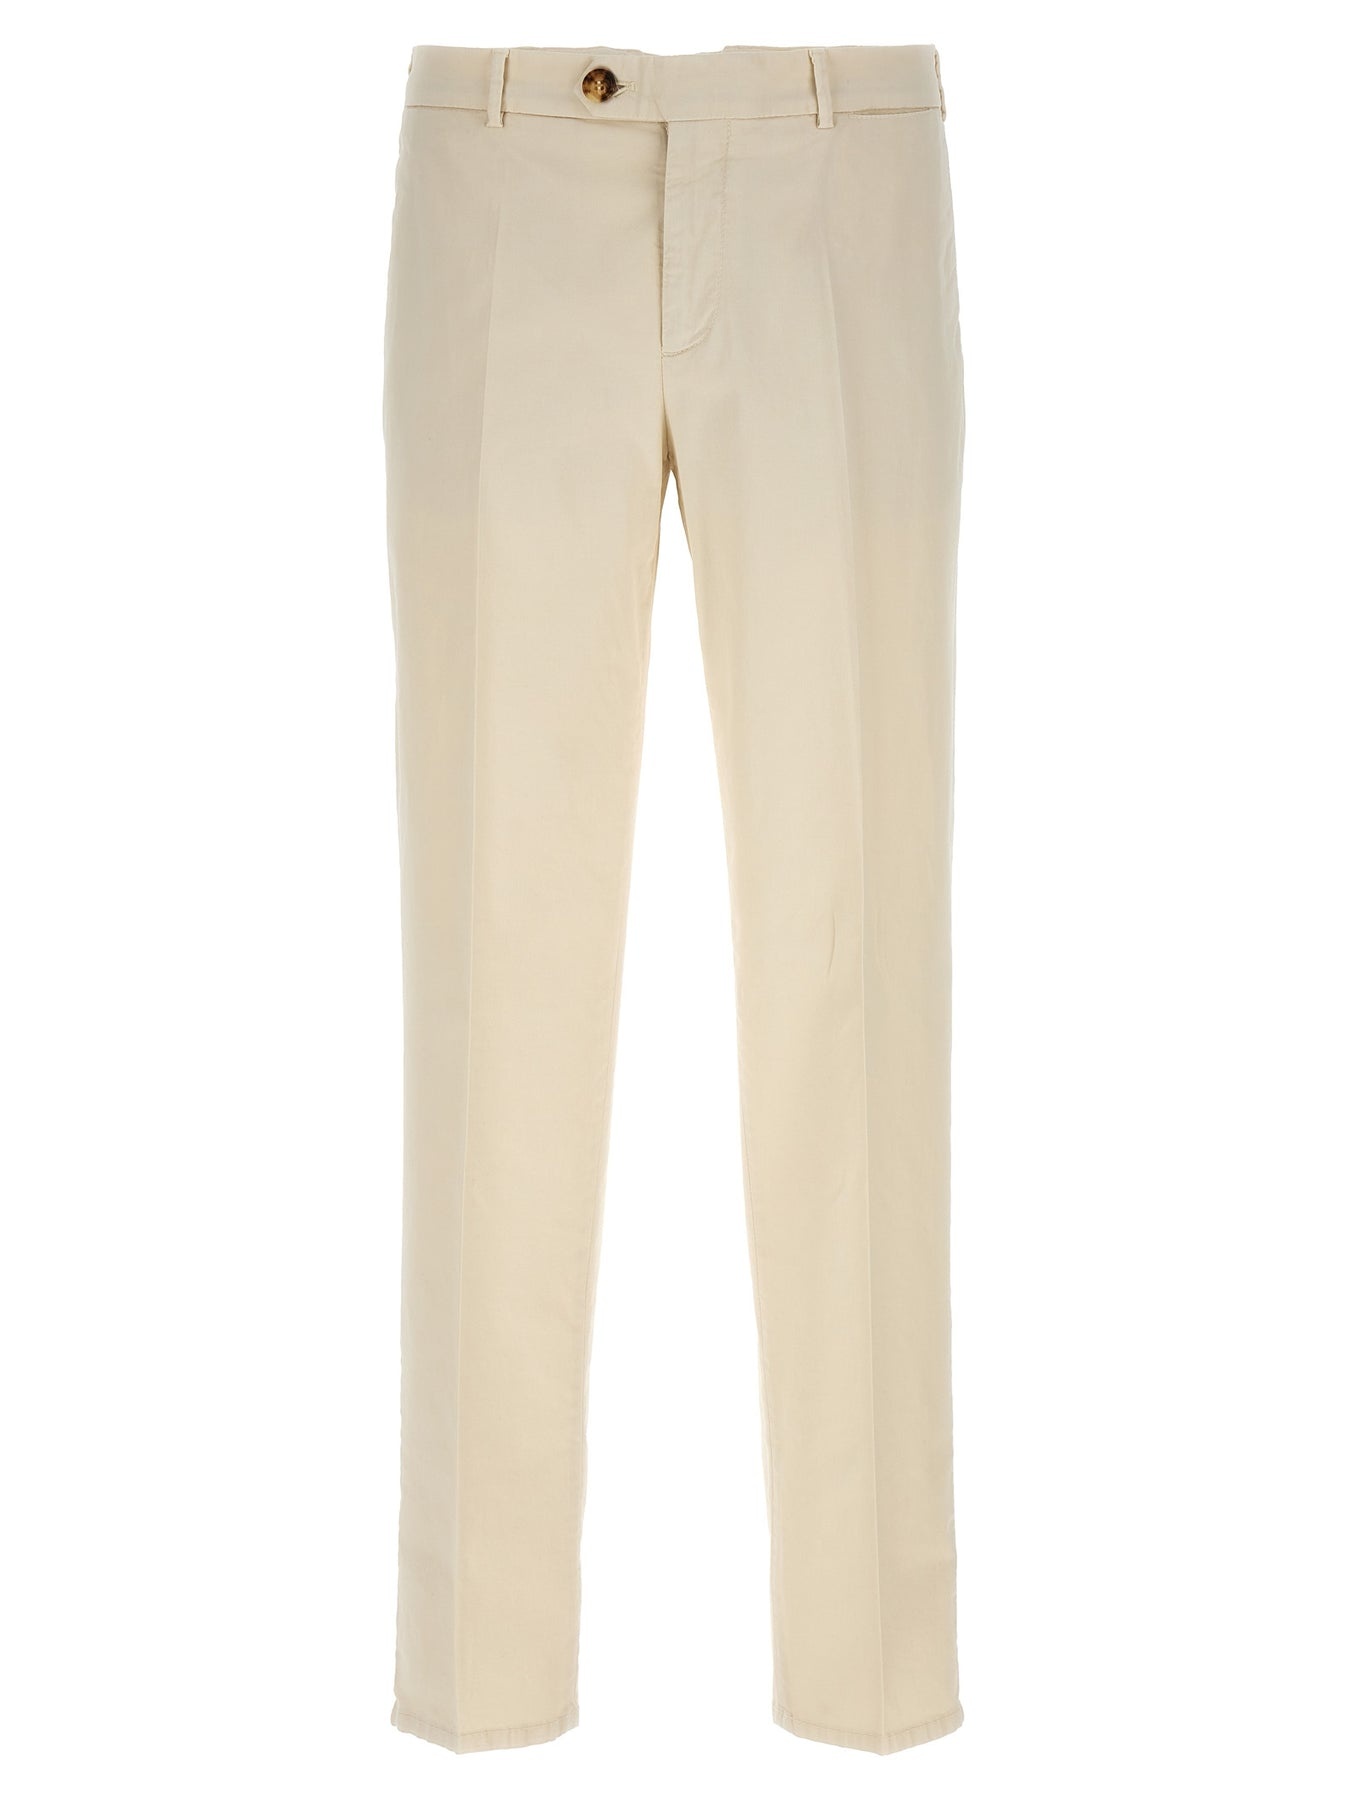 Cotton Trousers Pants White - 1